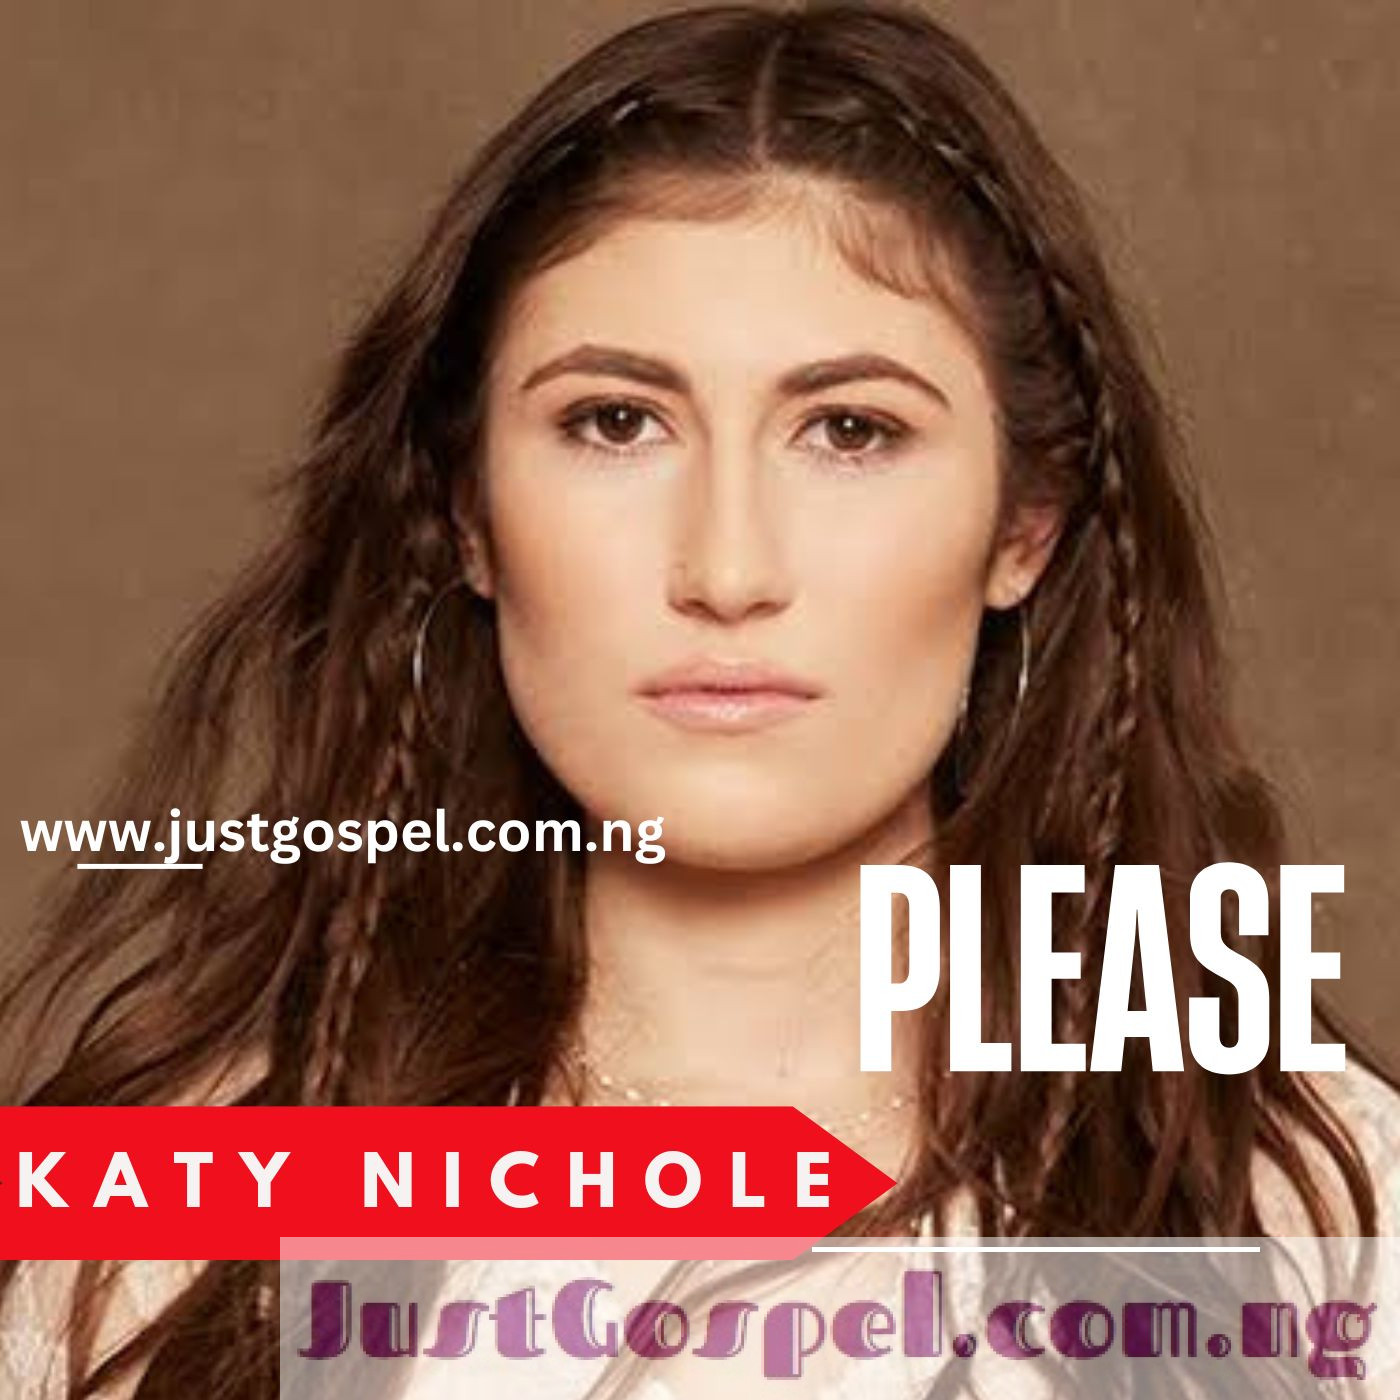 Katy Nichole – Please Mp3 Download, Lyrics